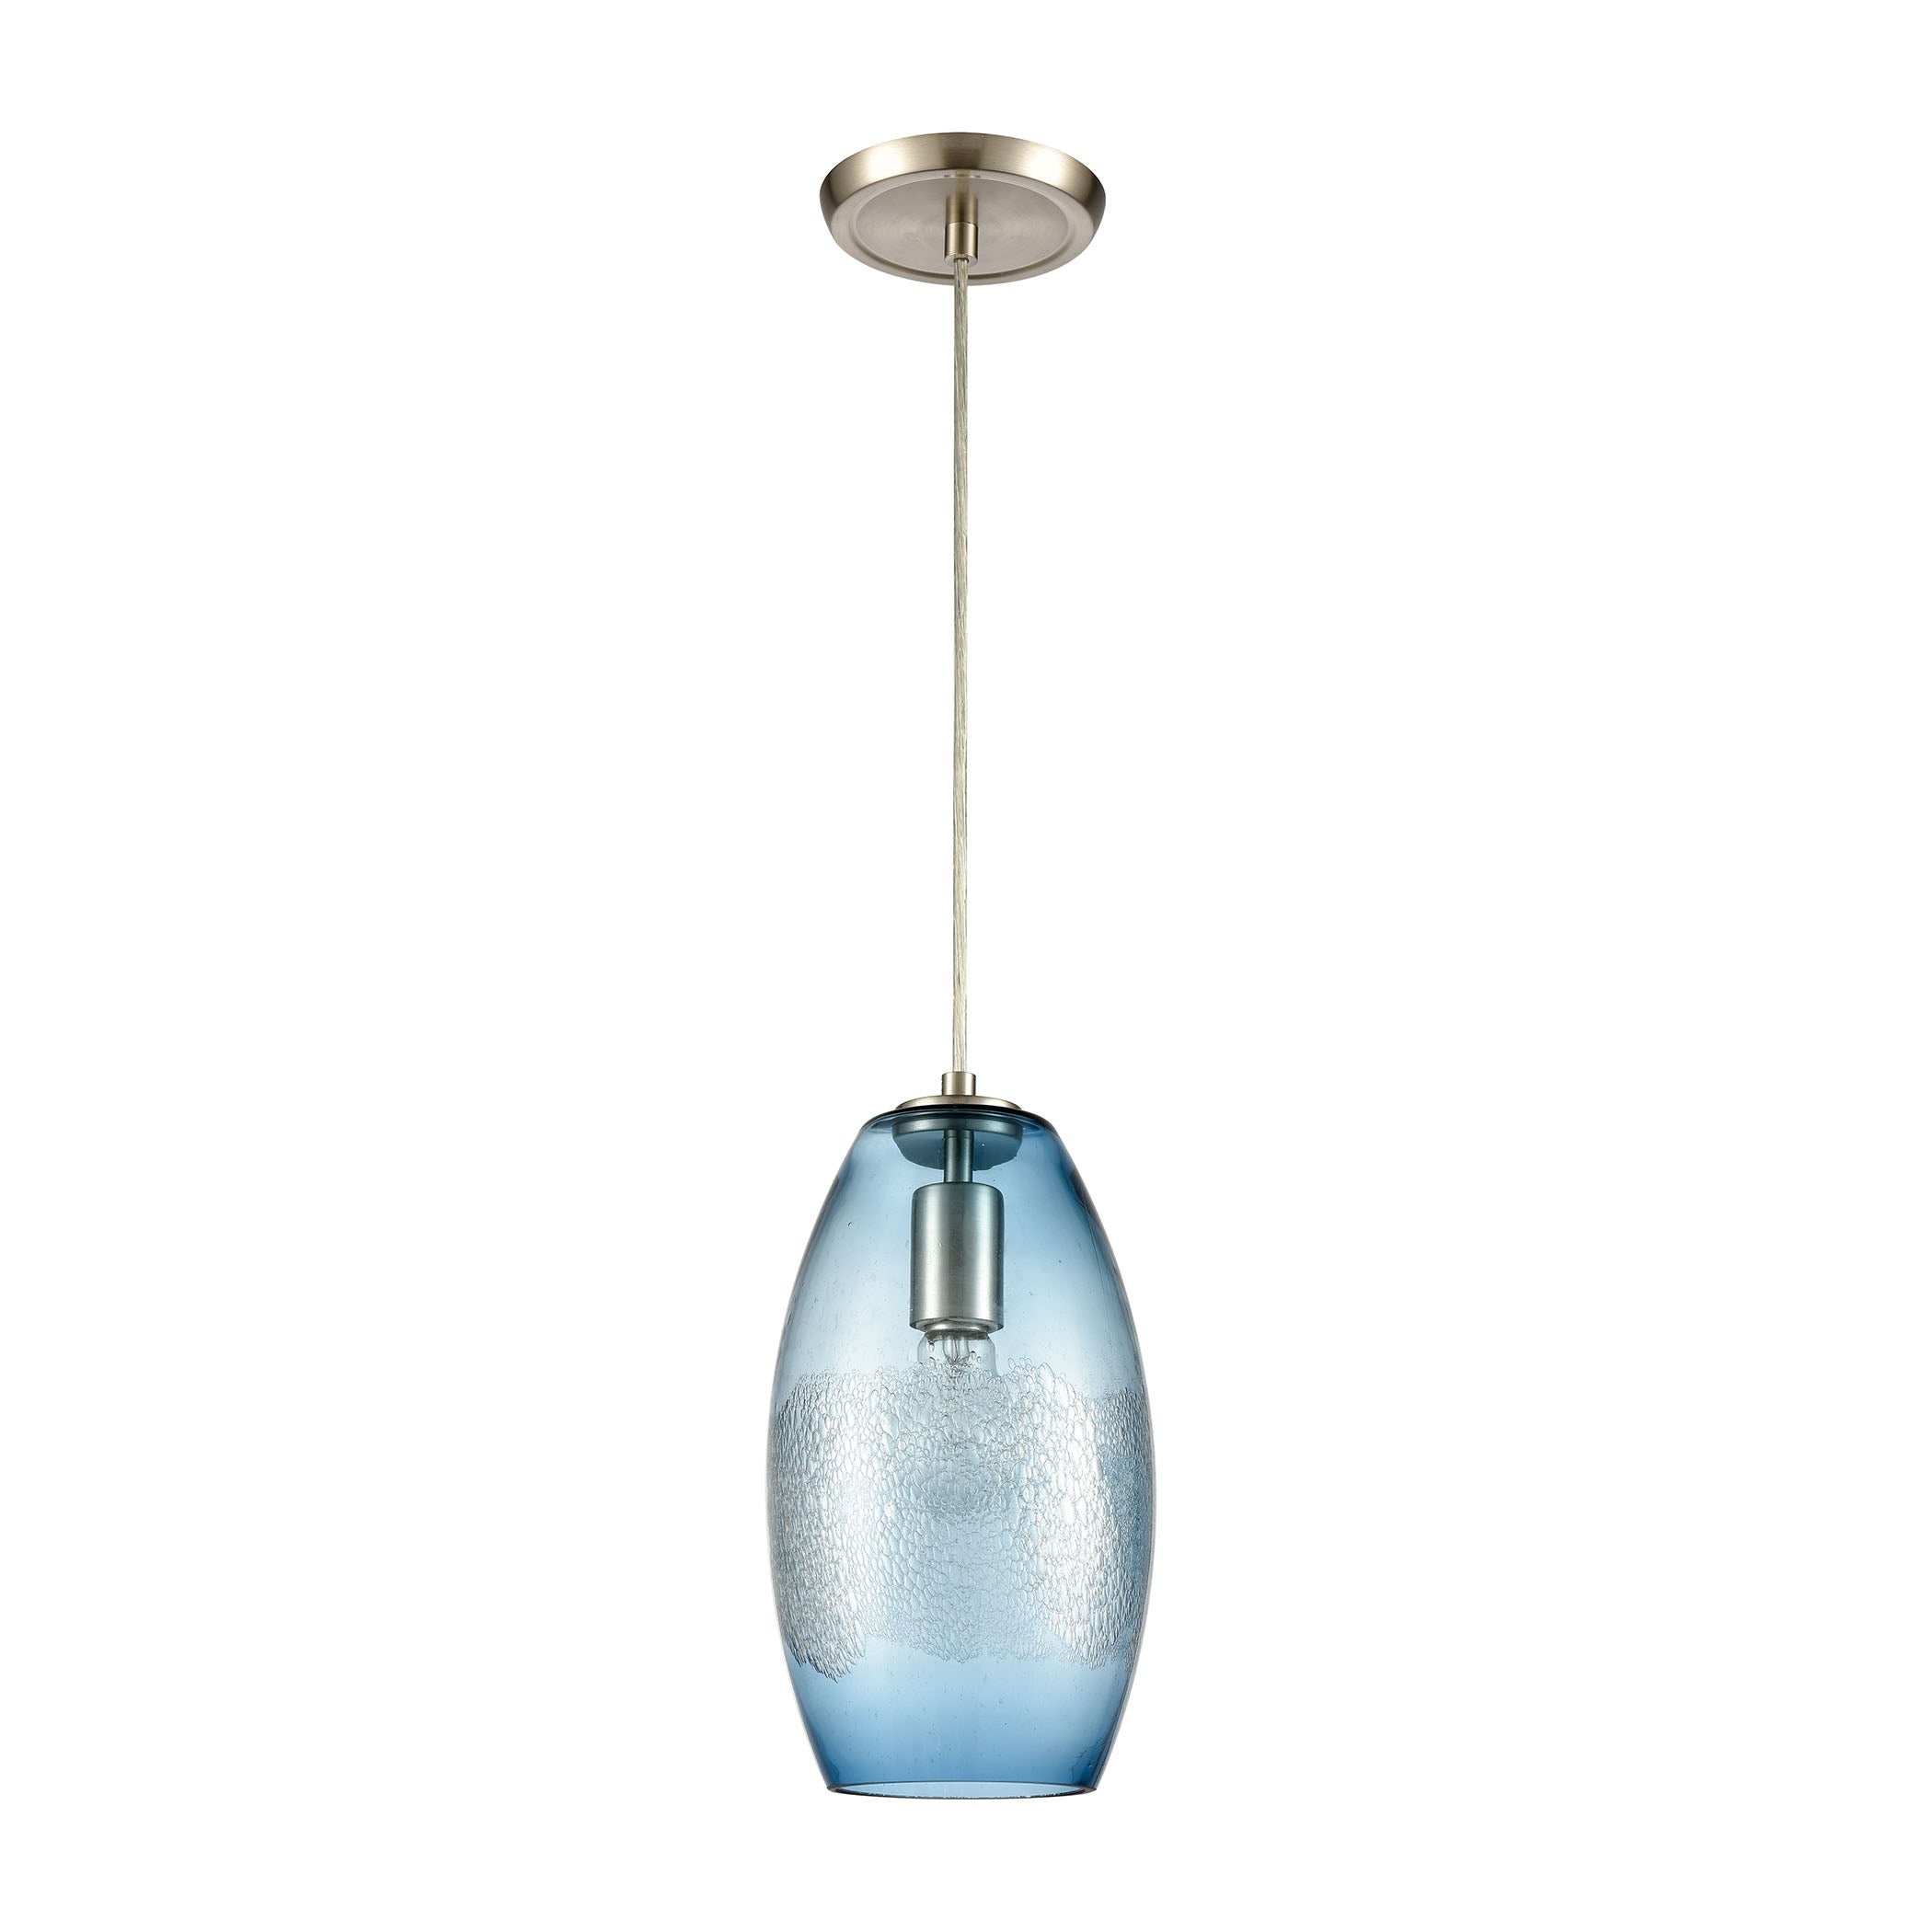 ELK Lighting 30210/1 Ebbtide 1-Light Mini Pendant in Satin Nickel with Aqua Blue and Lightly Textured Glass